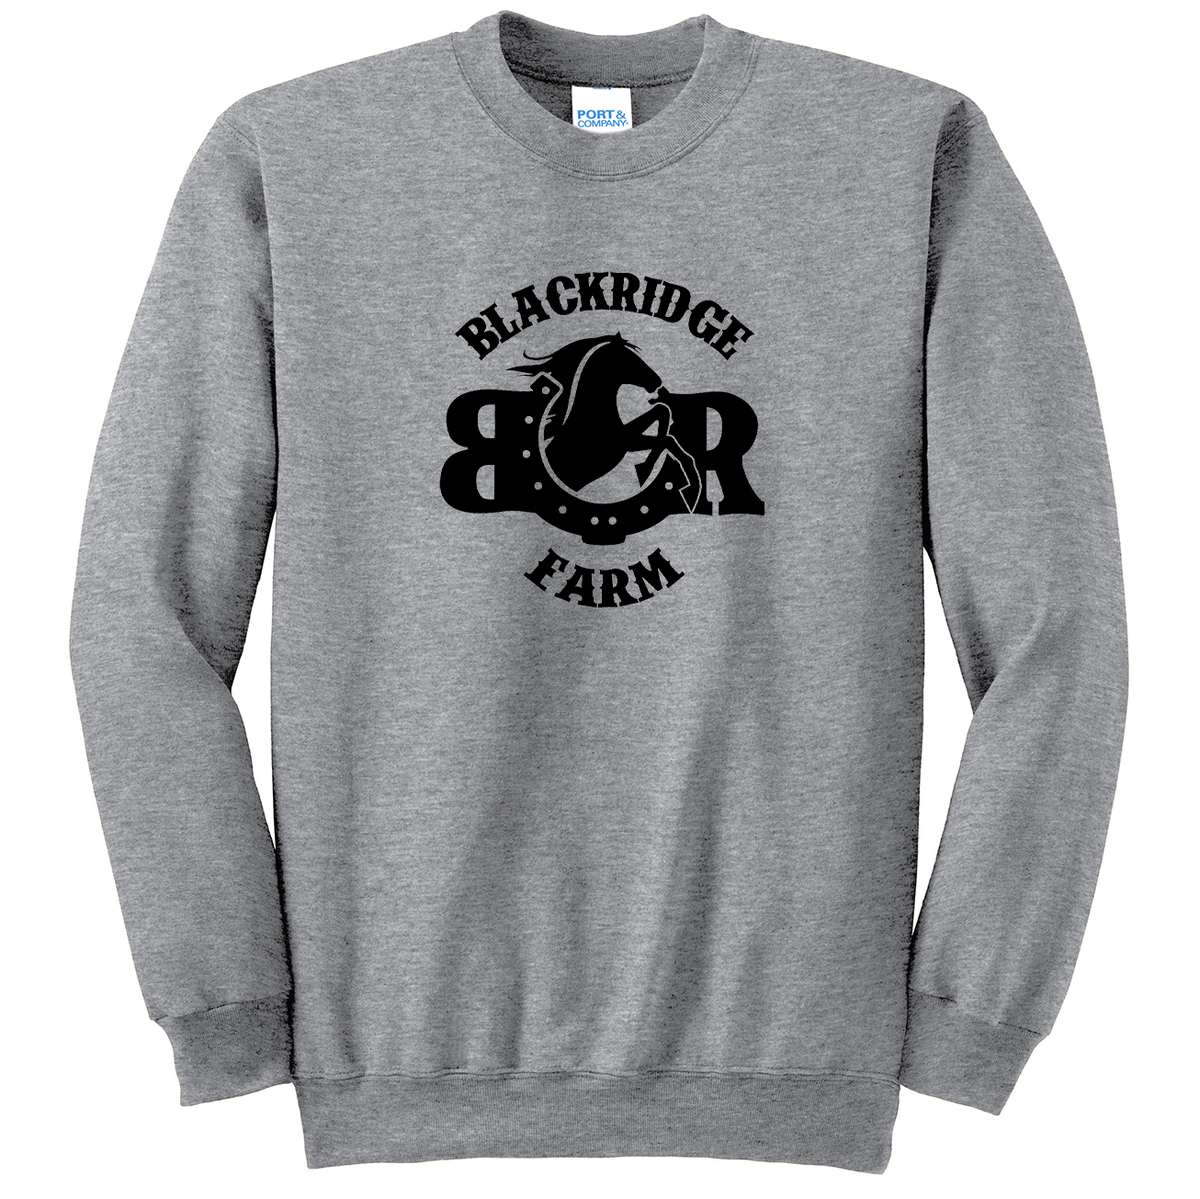 Blackridge Farm Crew Neck Sweater